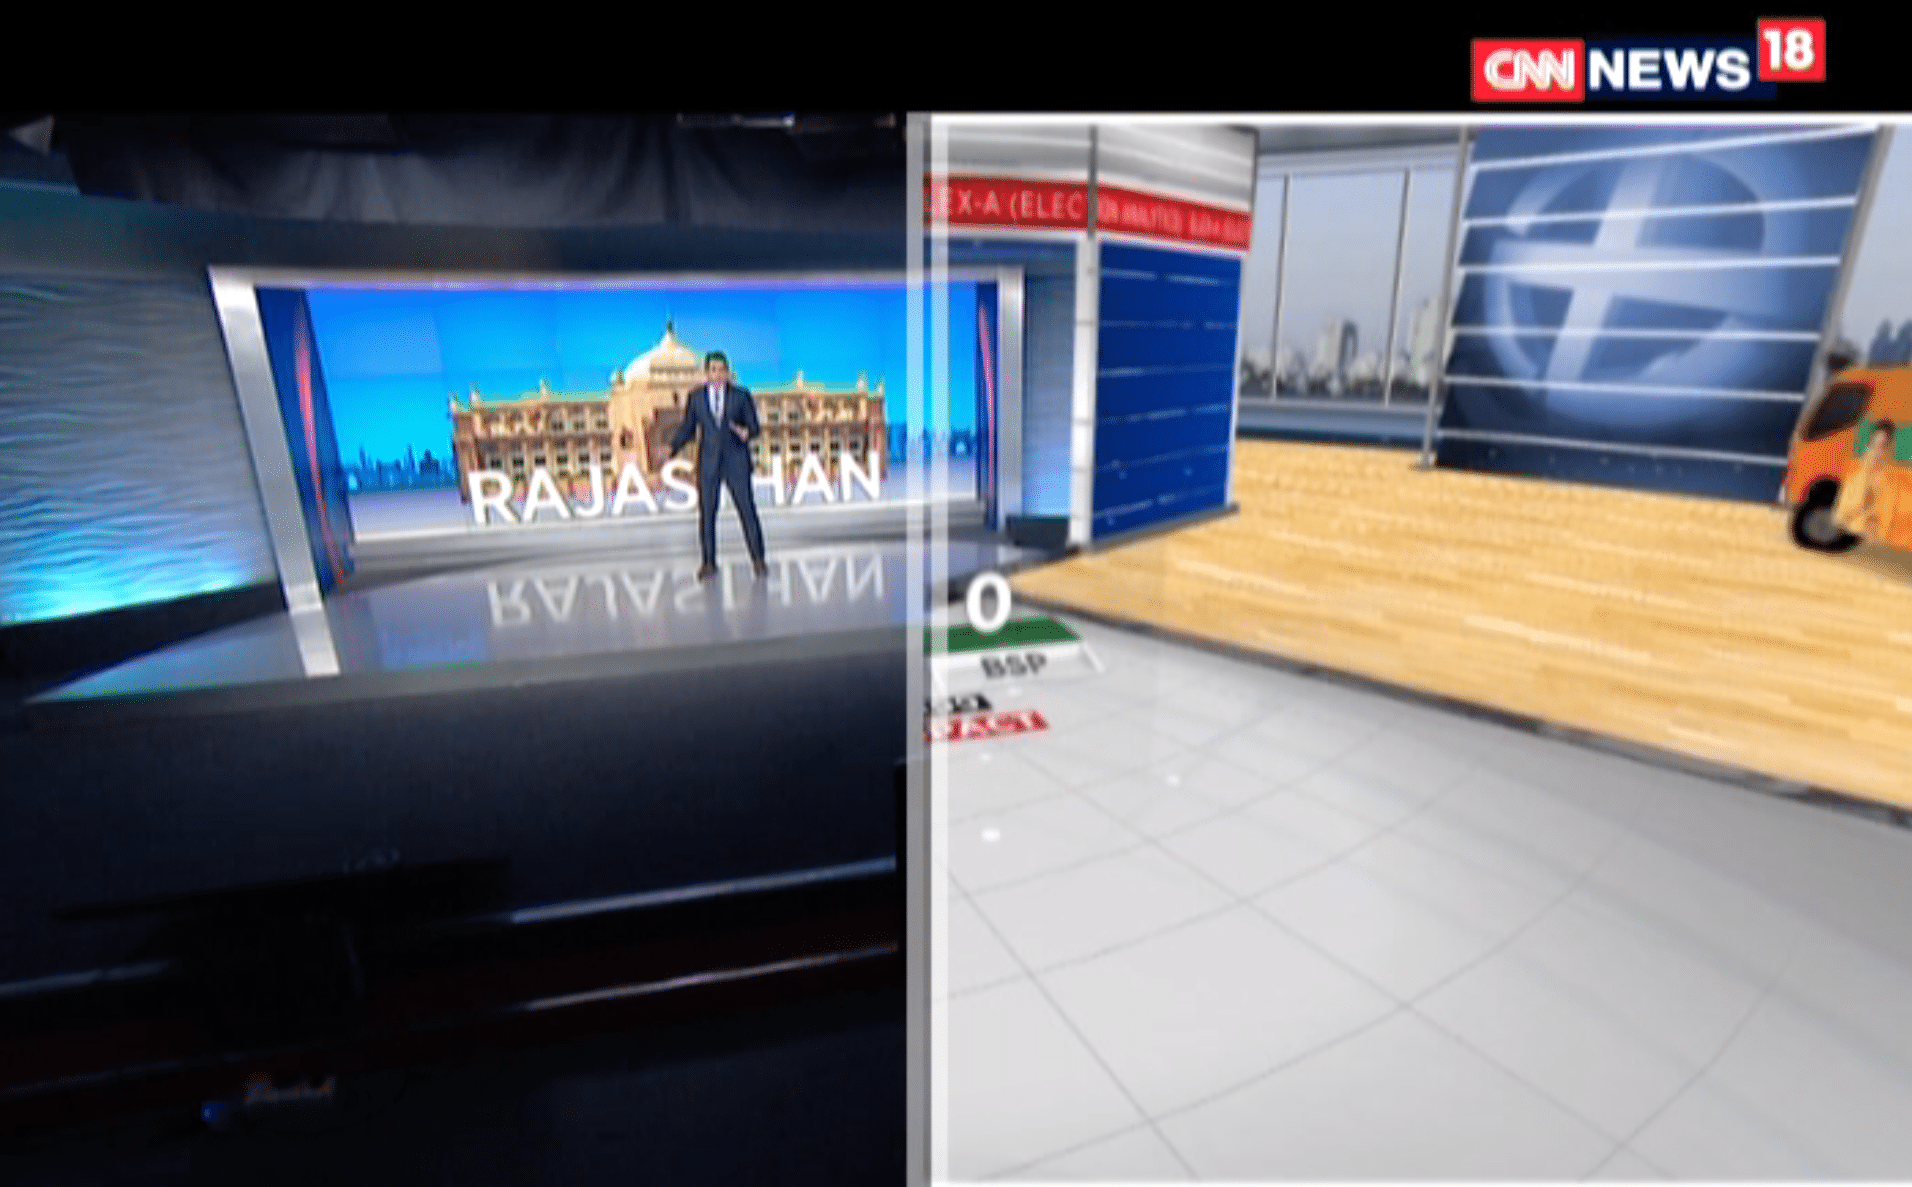 CNN News 18 2018 election studio